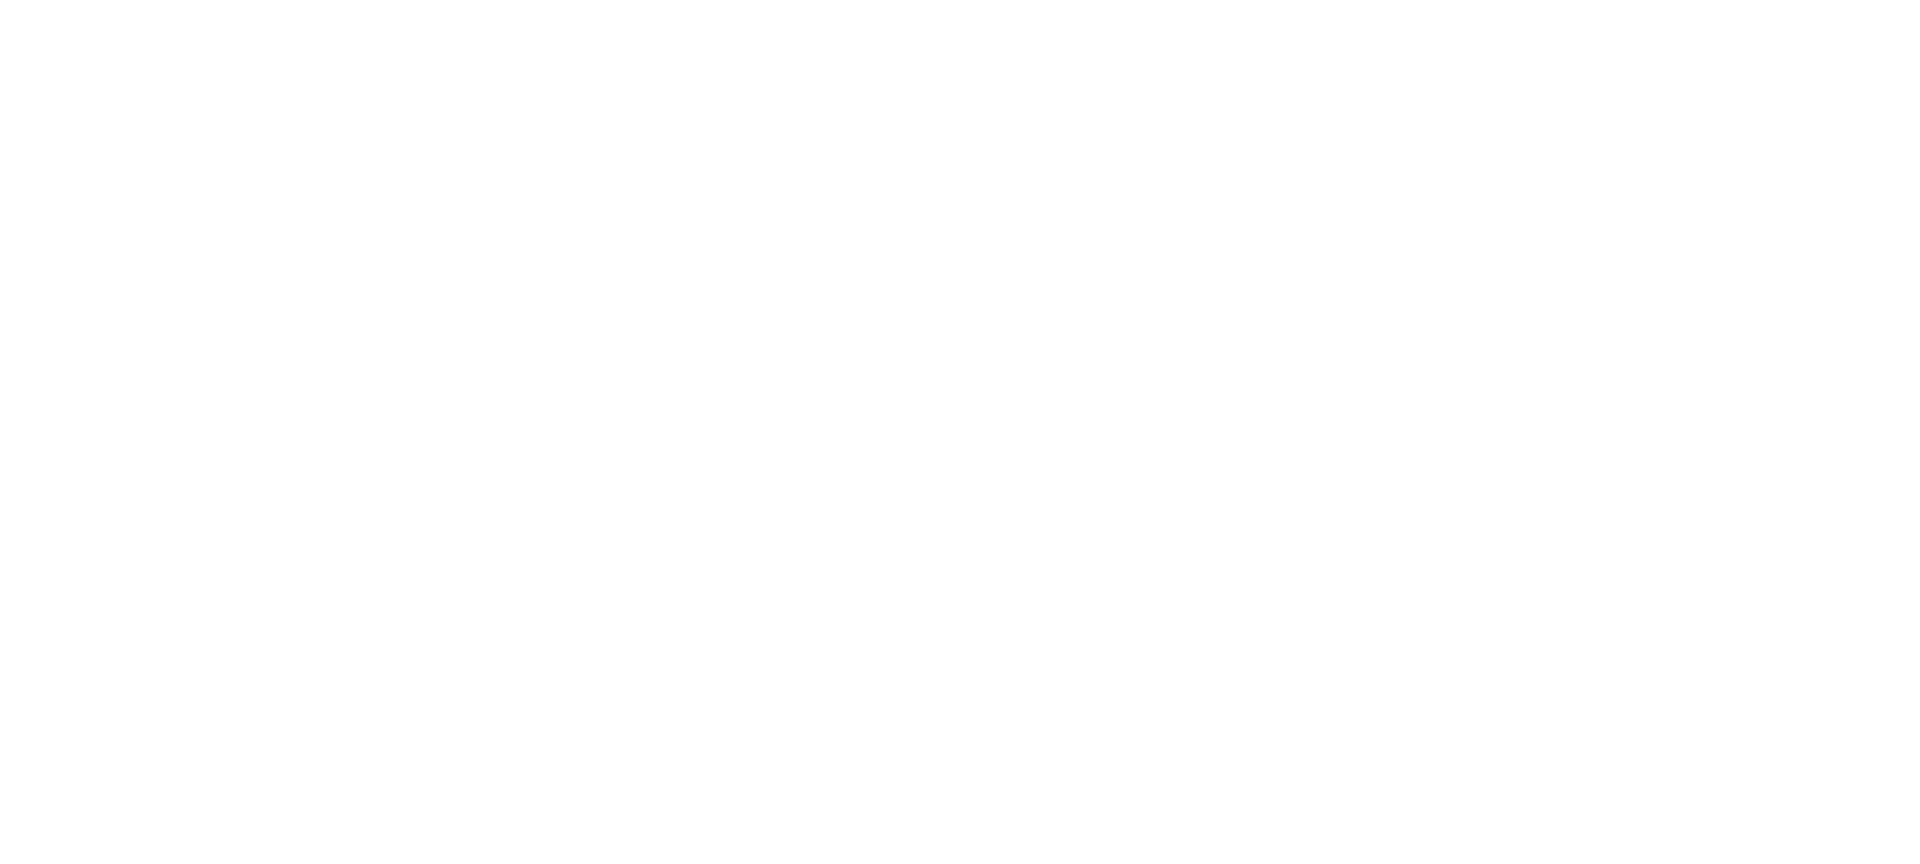 Salembridge Photos and Video